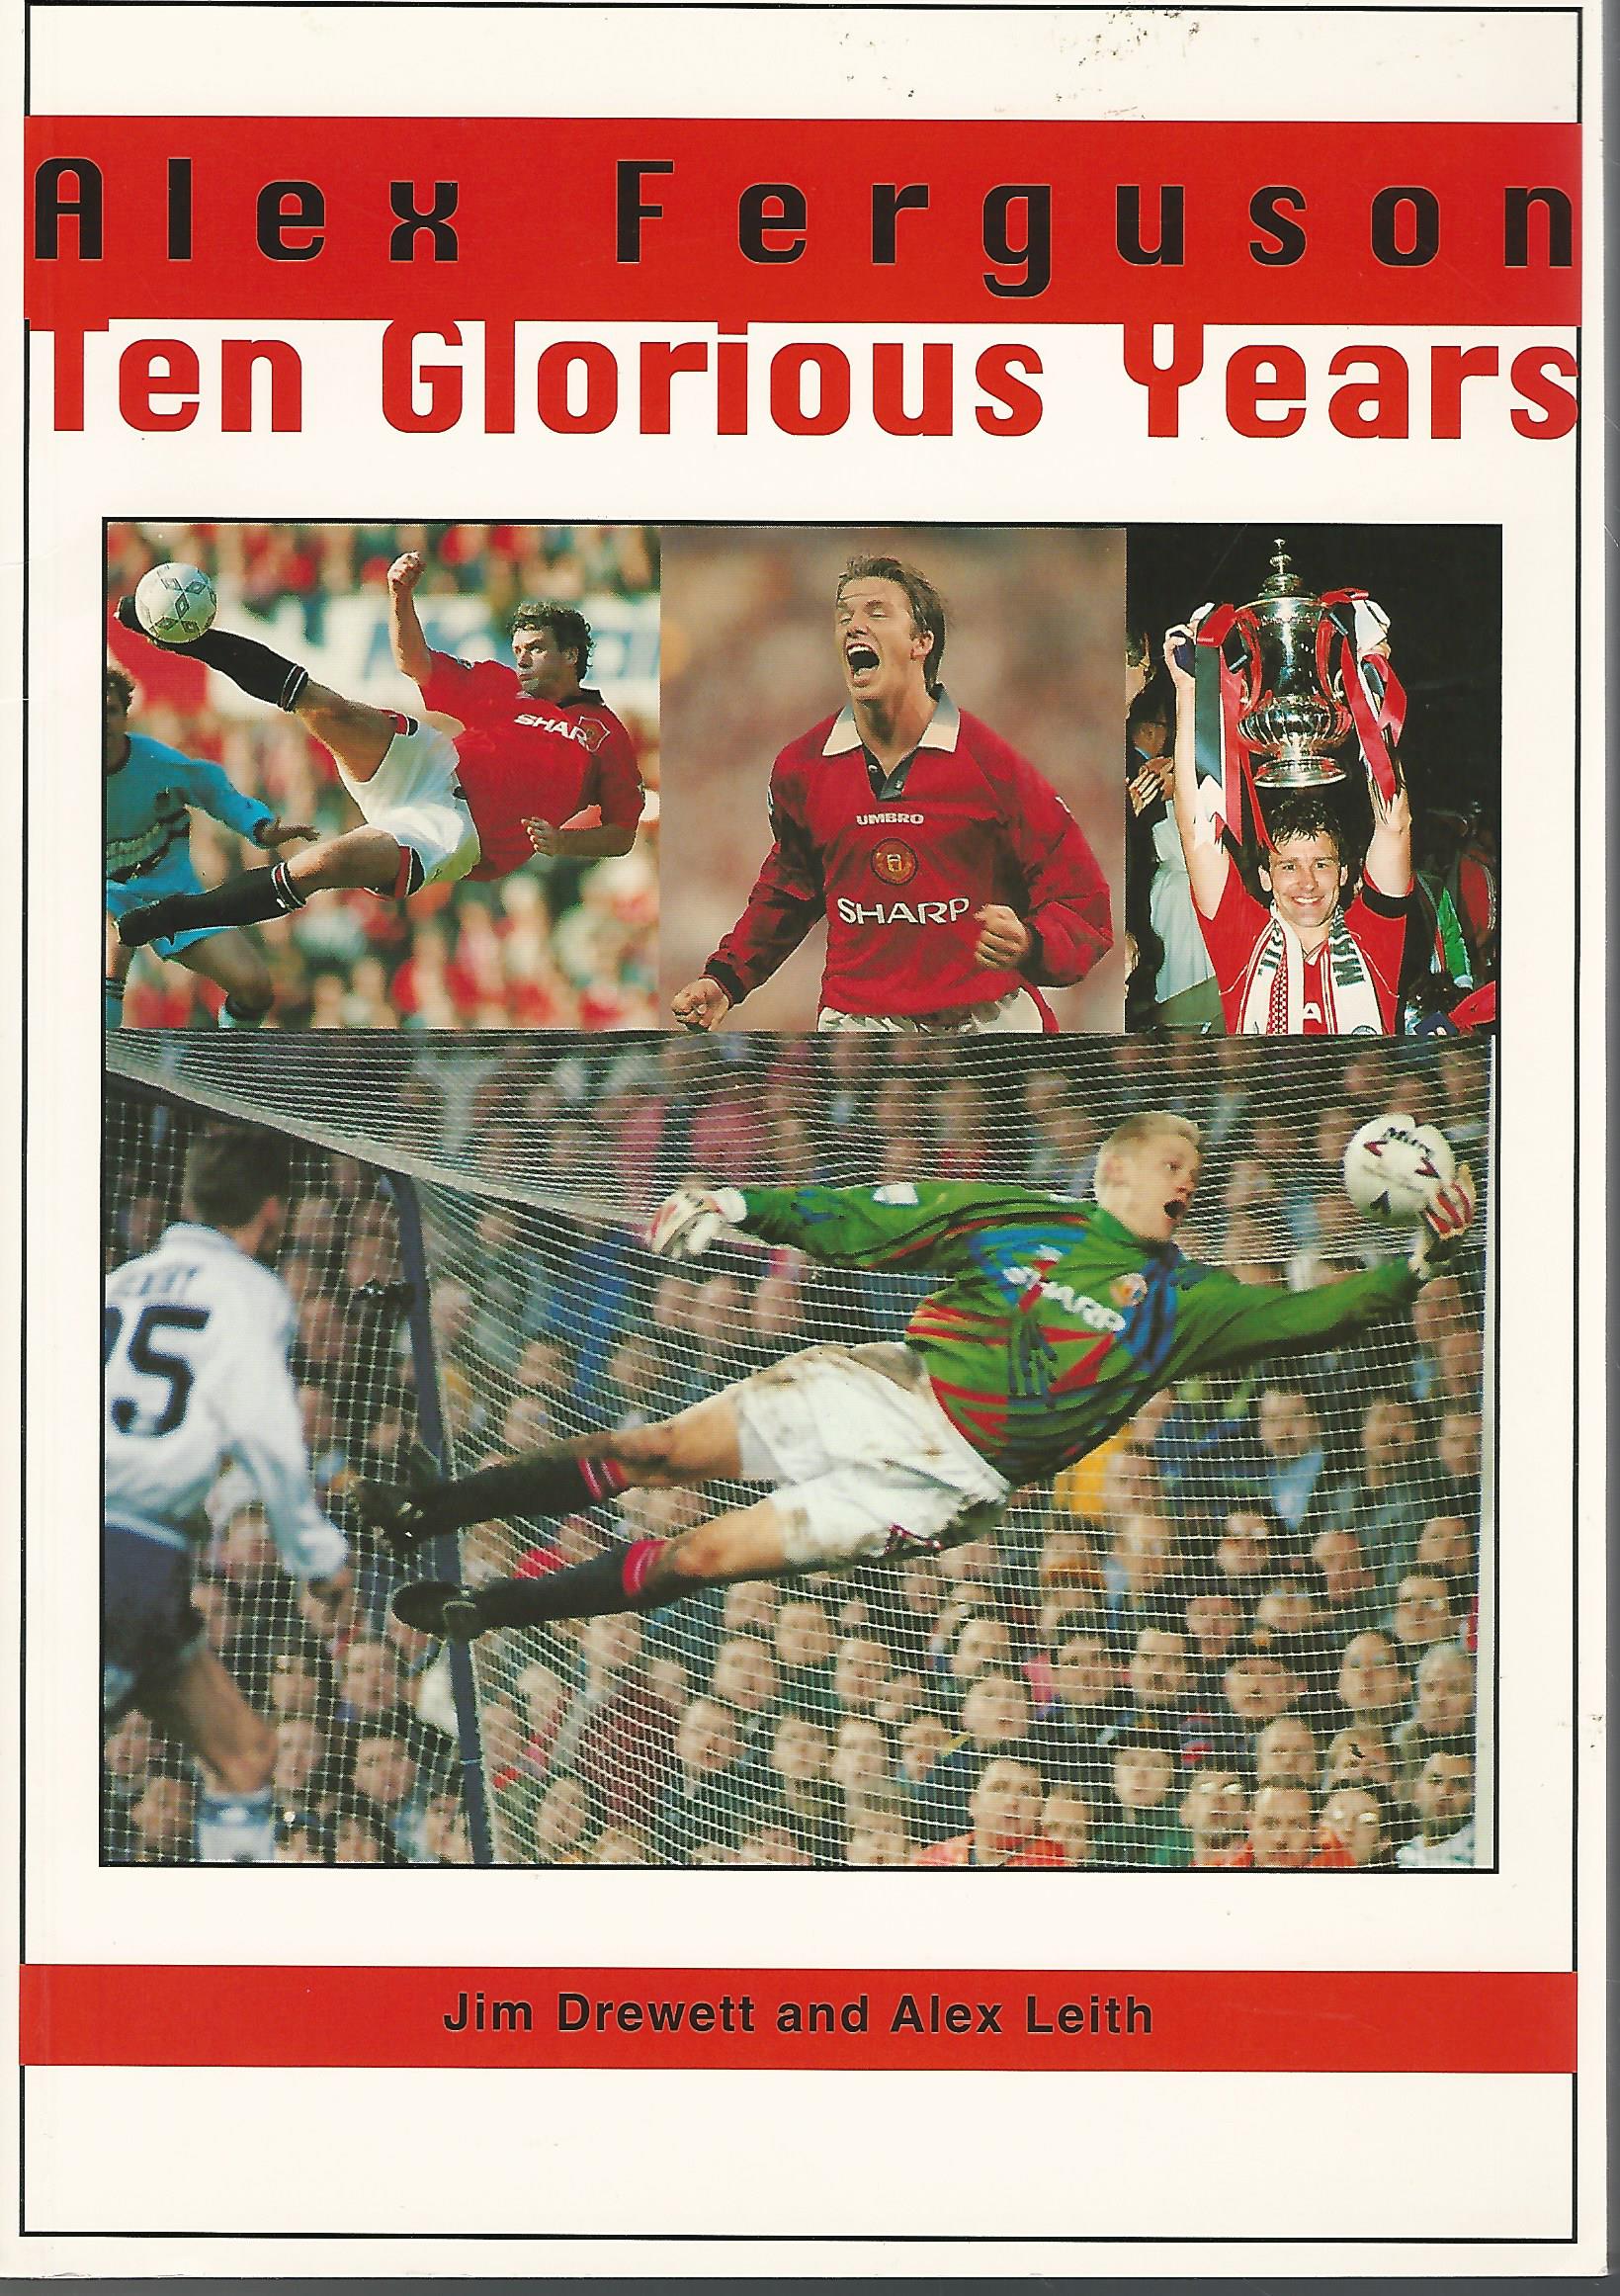 Drewett, Jim and Leith, Alex - Alex Ferguson -Ten Glorious Years